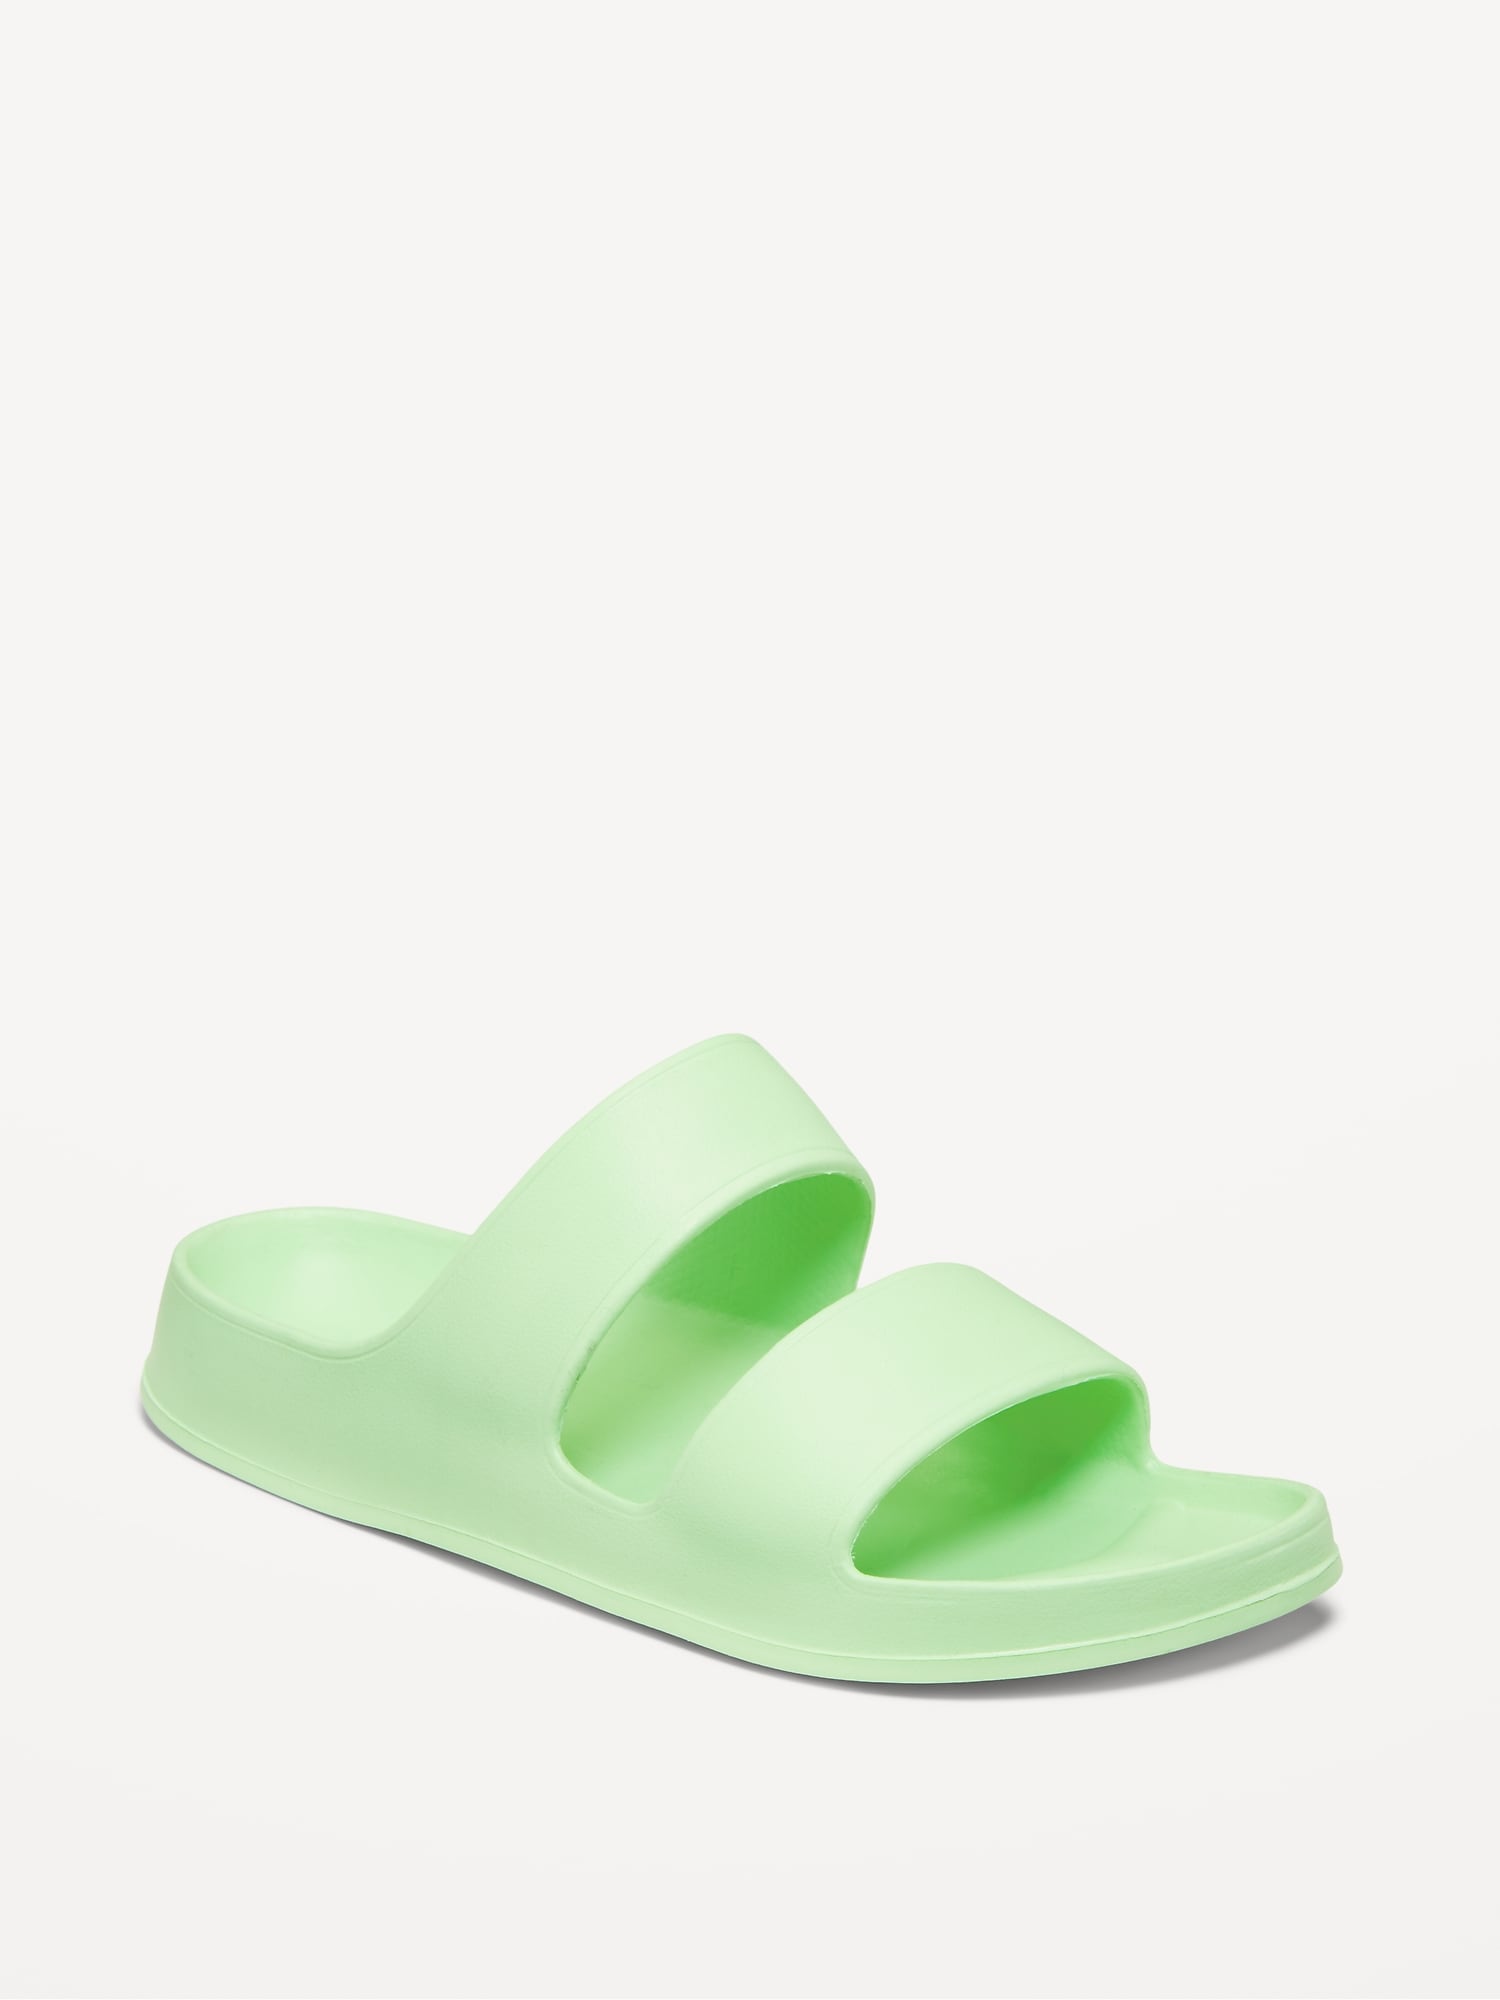 Oldnavy Gender-Neutral Double-Strap EVA Slide Sandals for Kids (Partially Plant-Based)